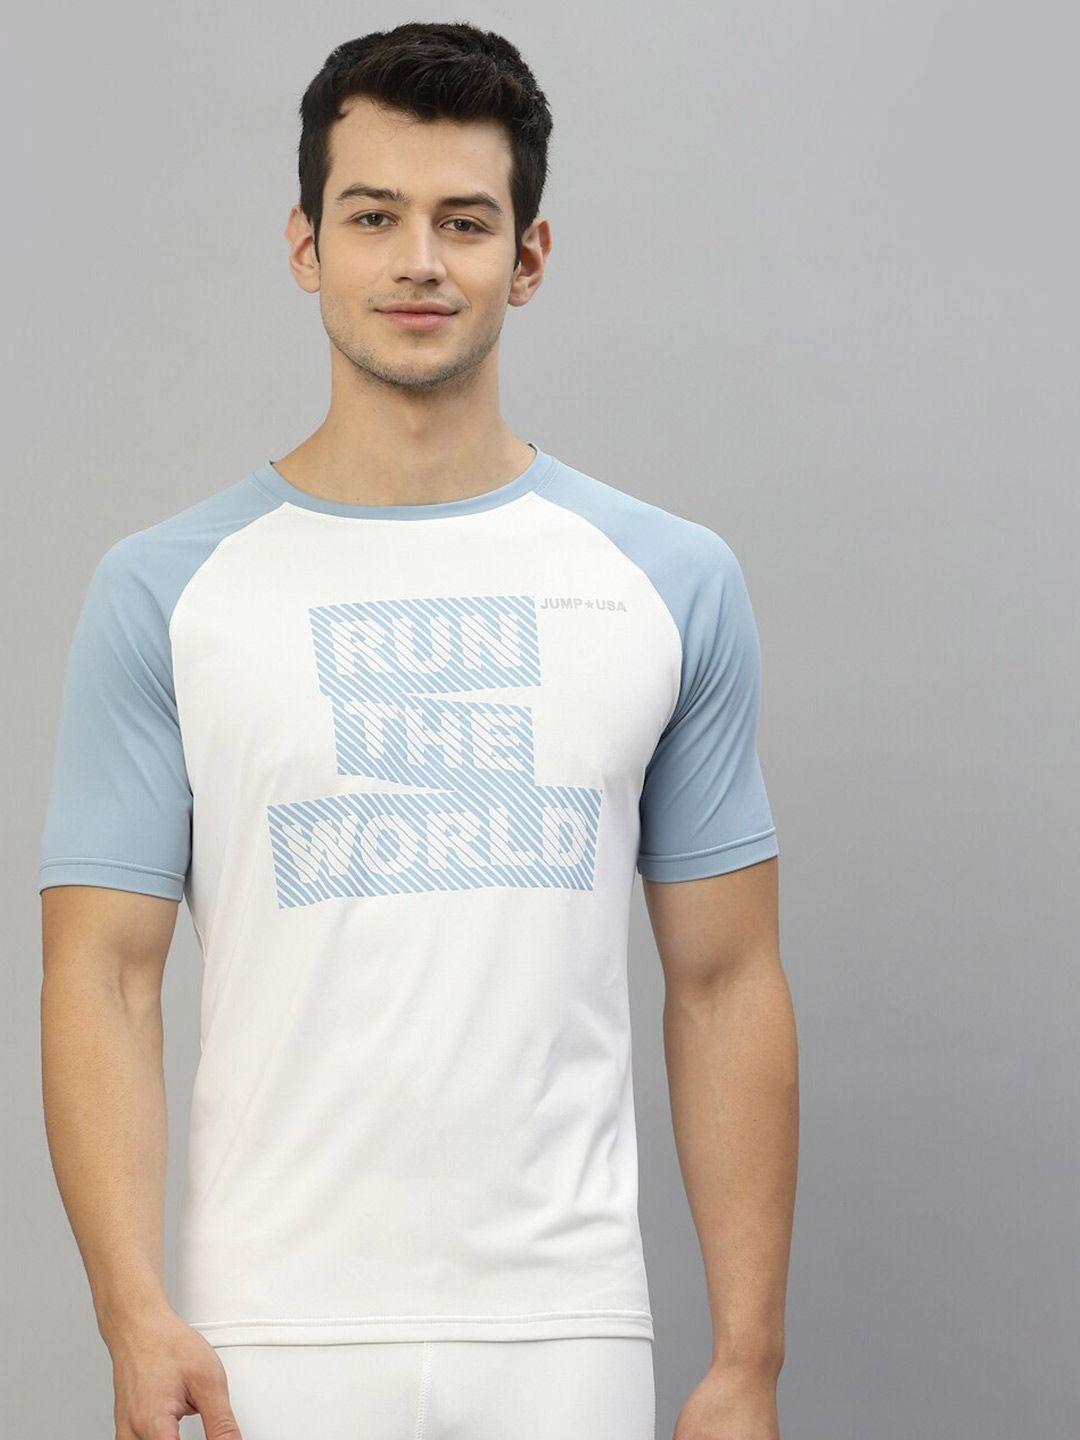 jump usa men white & blue colourblocked rapid dry  t-shirt